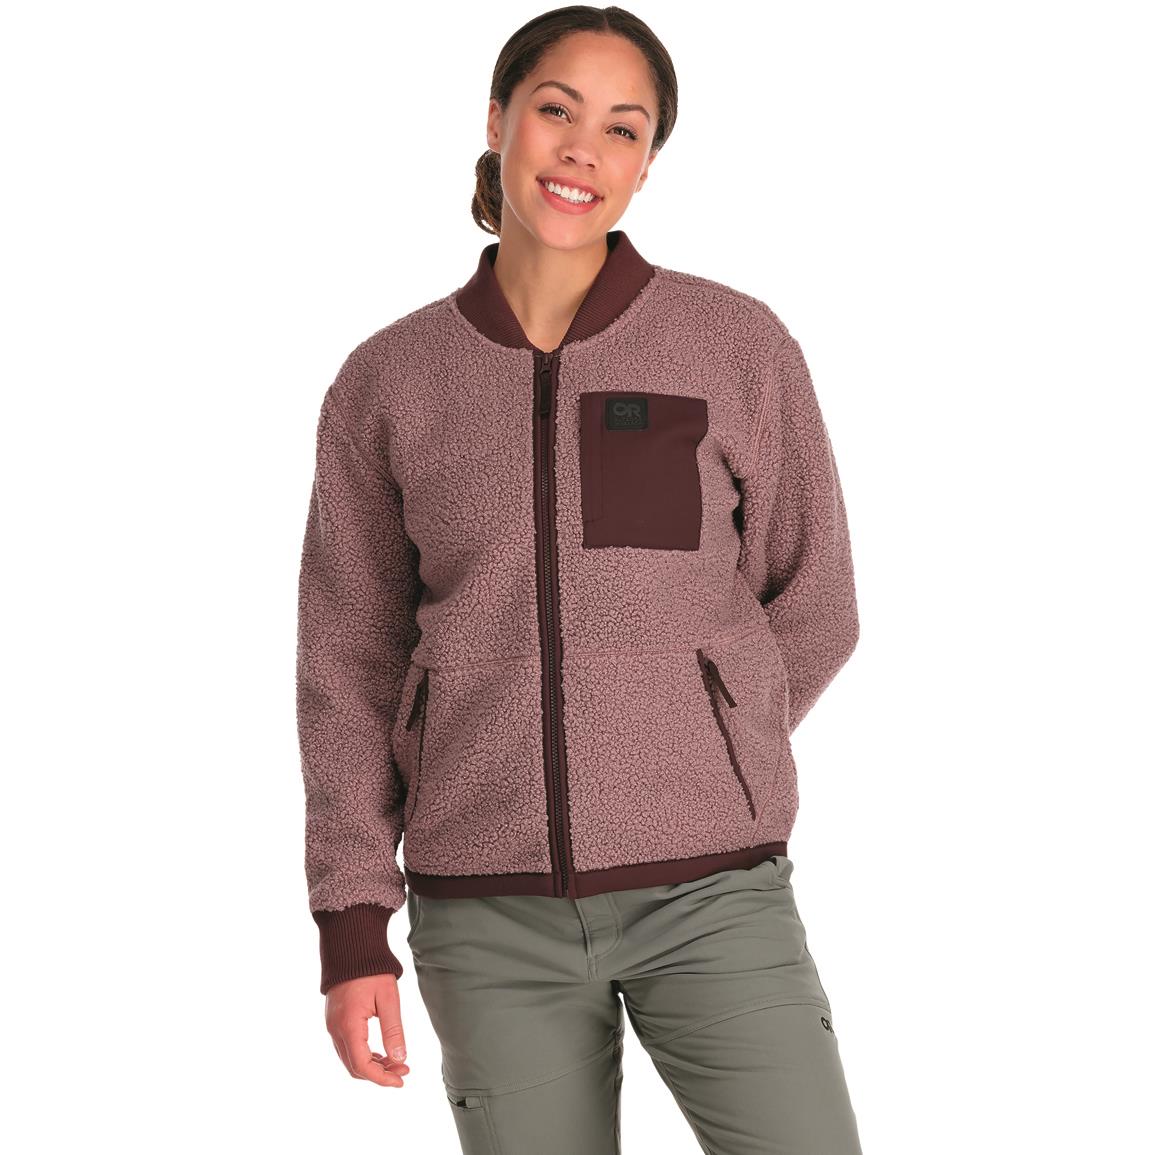 Outdoor Research Women's Juneau Fleece Jacket, Moth